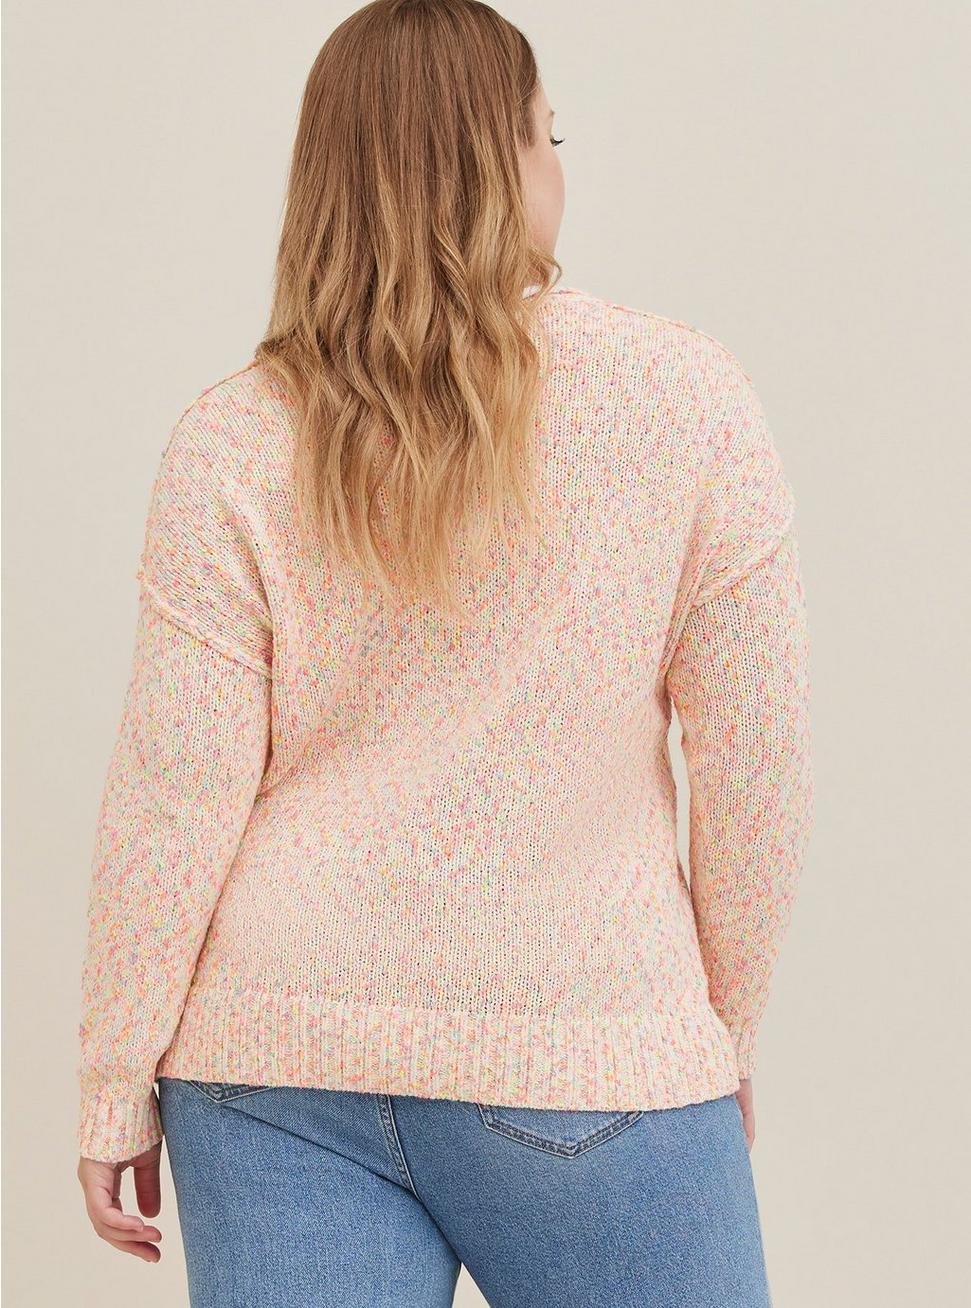 Pullover Sweater - Marled Cotton Flamingo Pink, MULTI, alternate